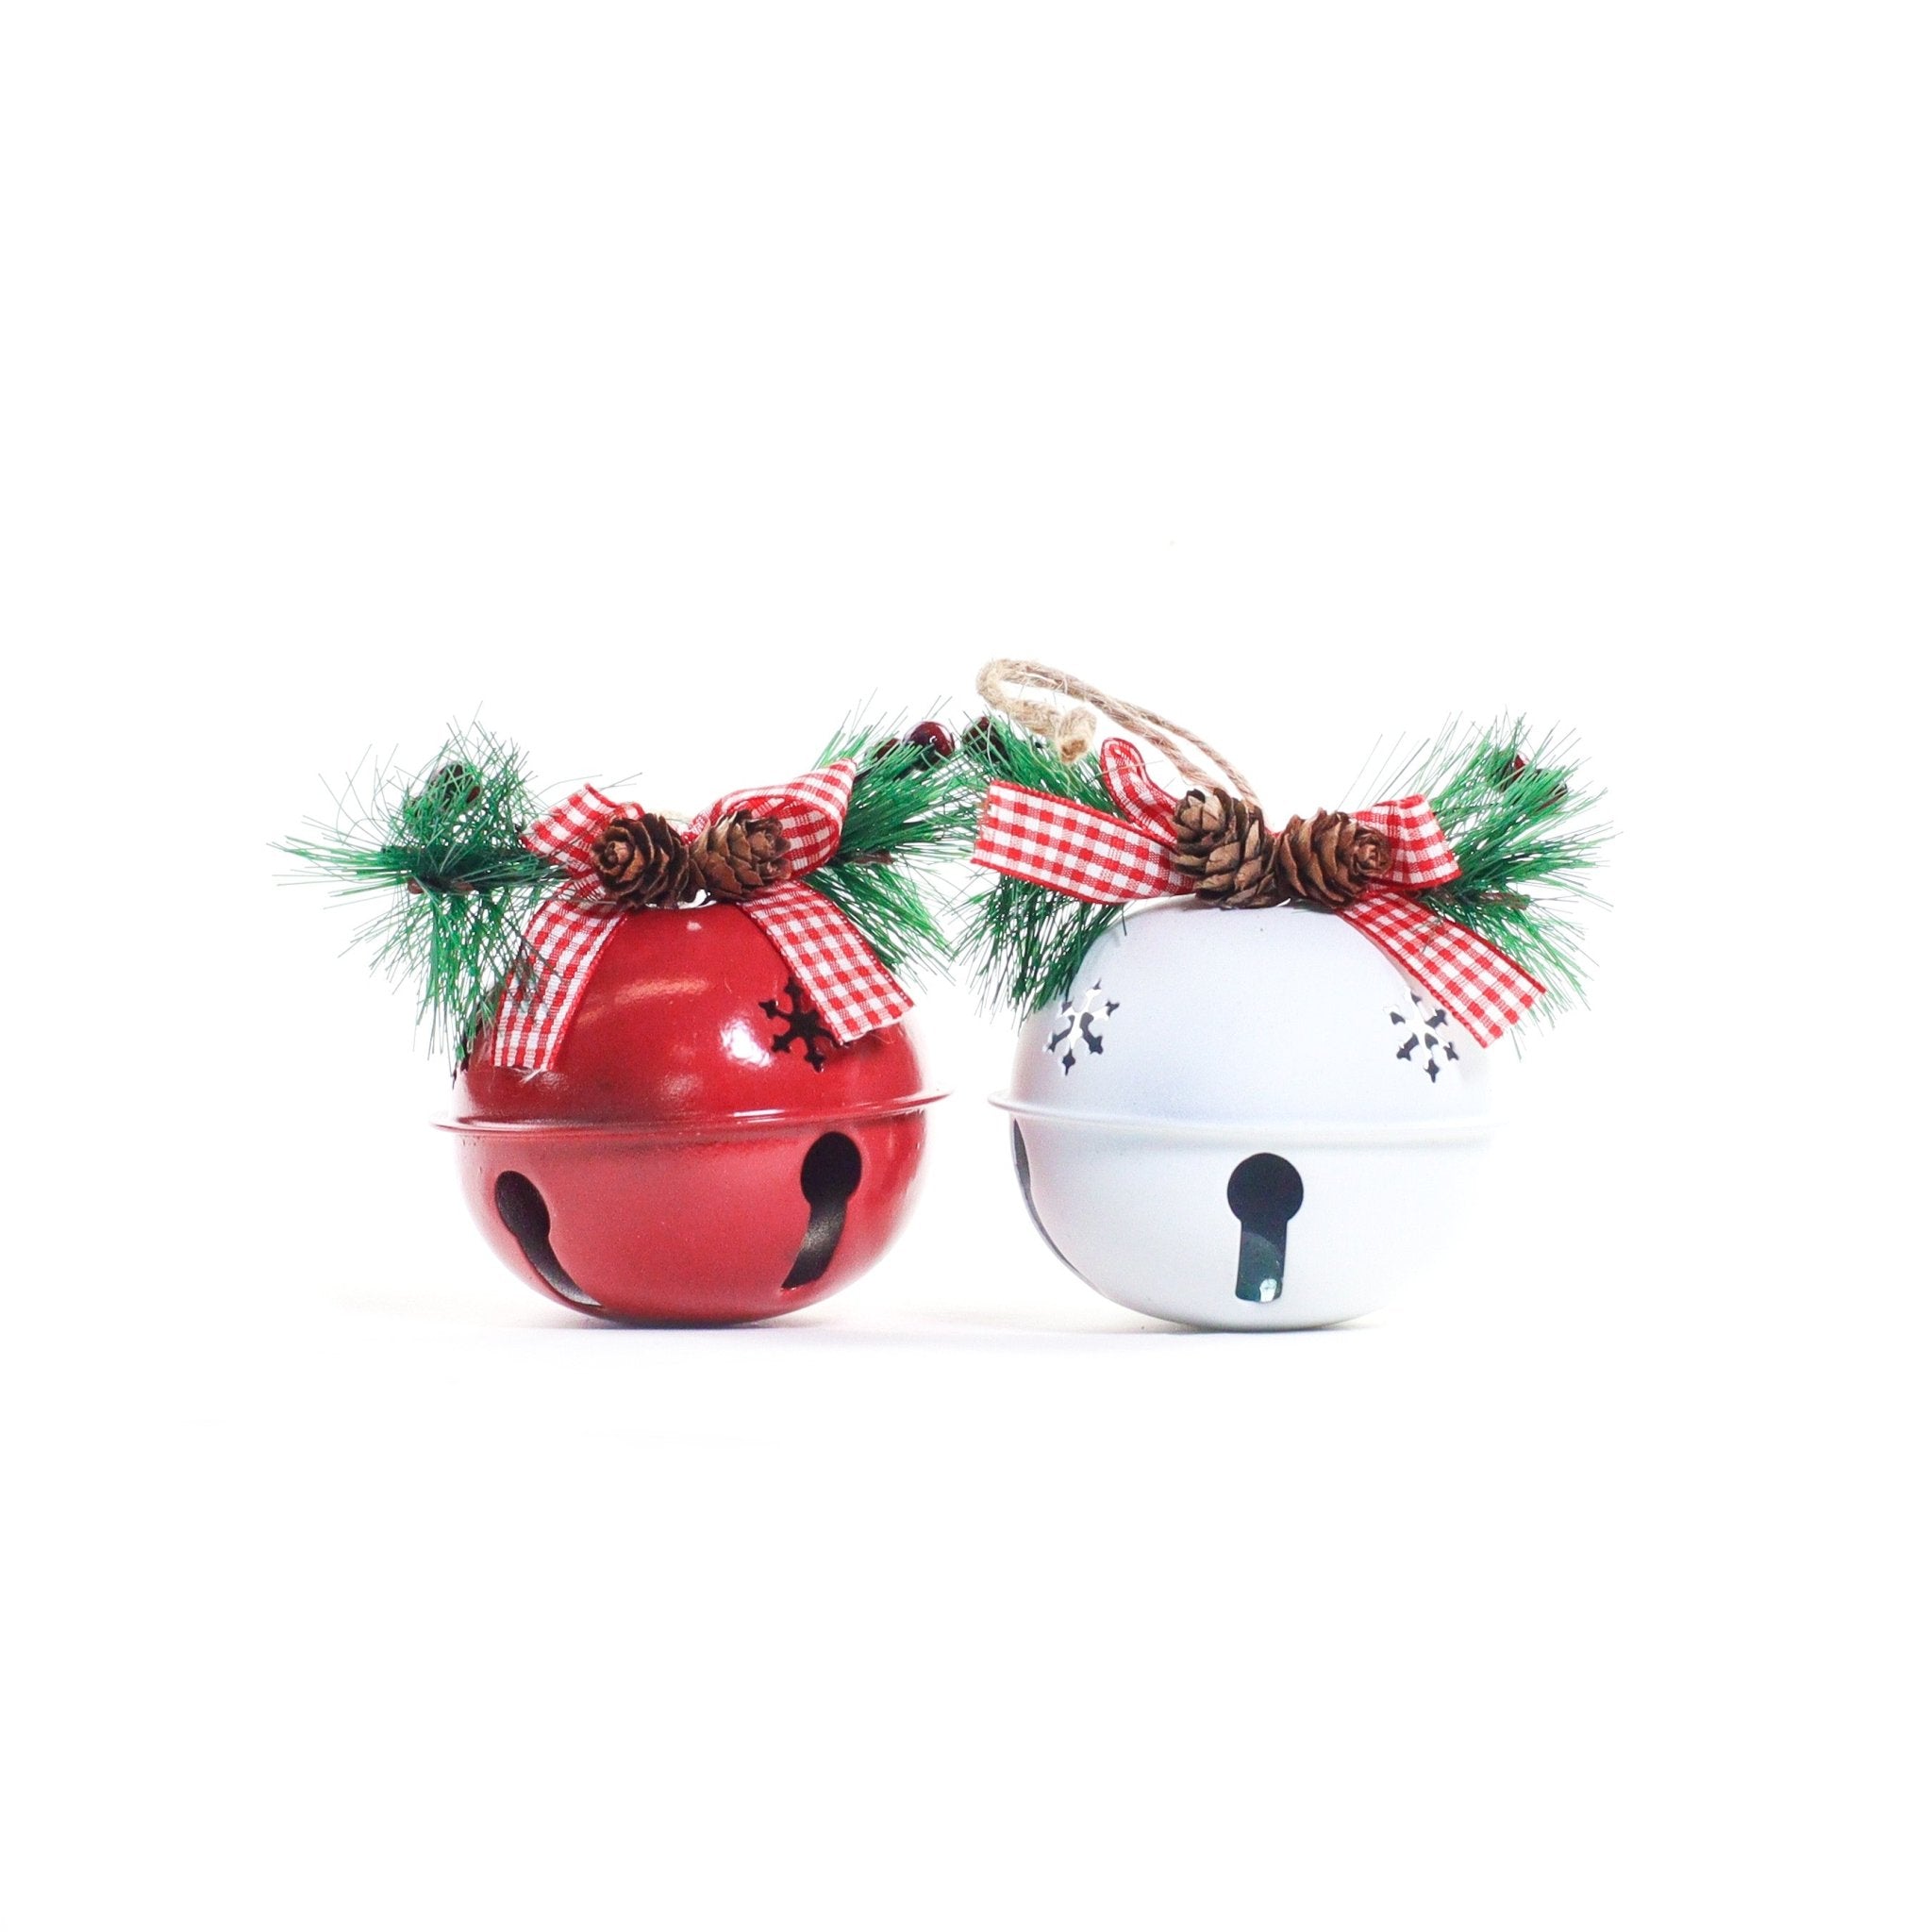 Rustic Jingle Bell Ornament red - MODA FLORA Santa's Workshop